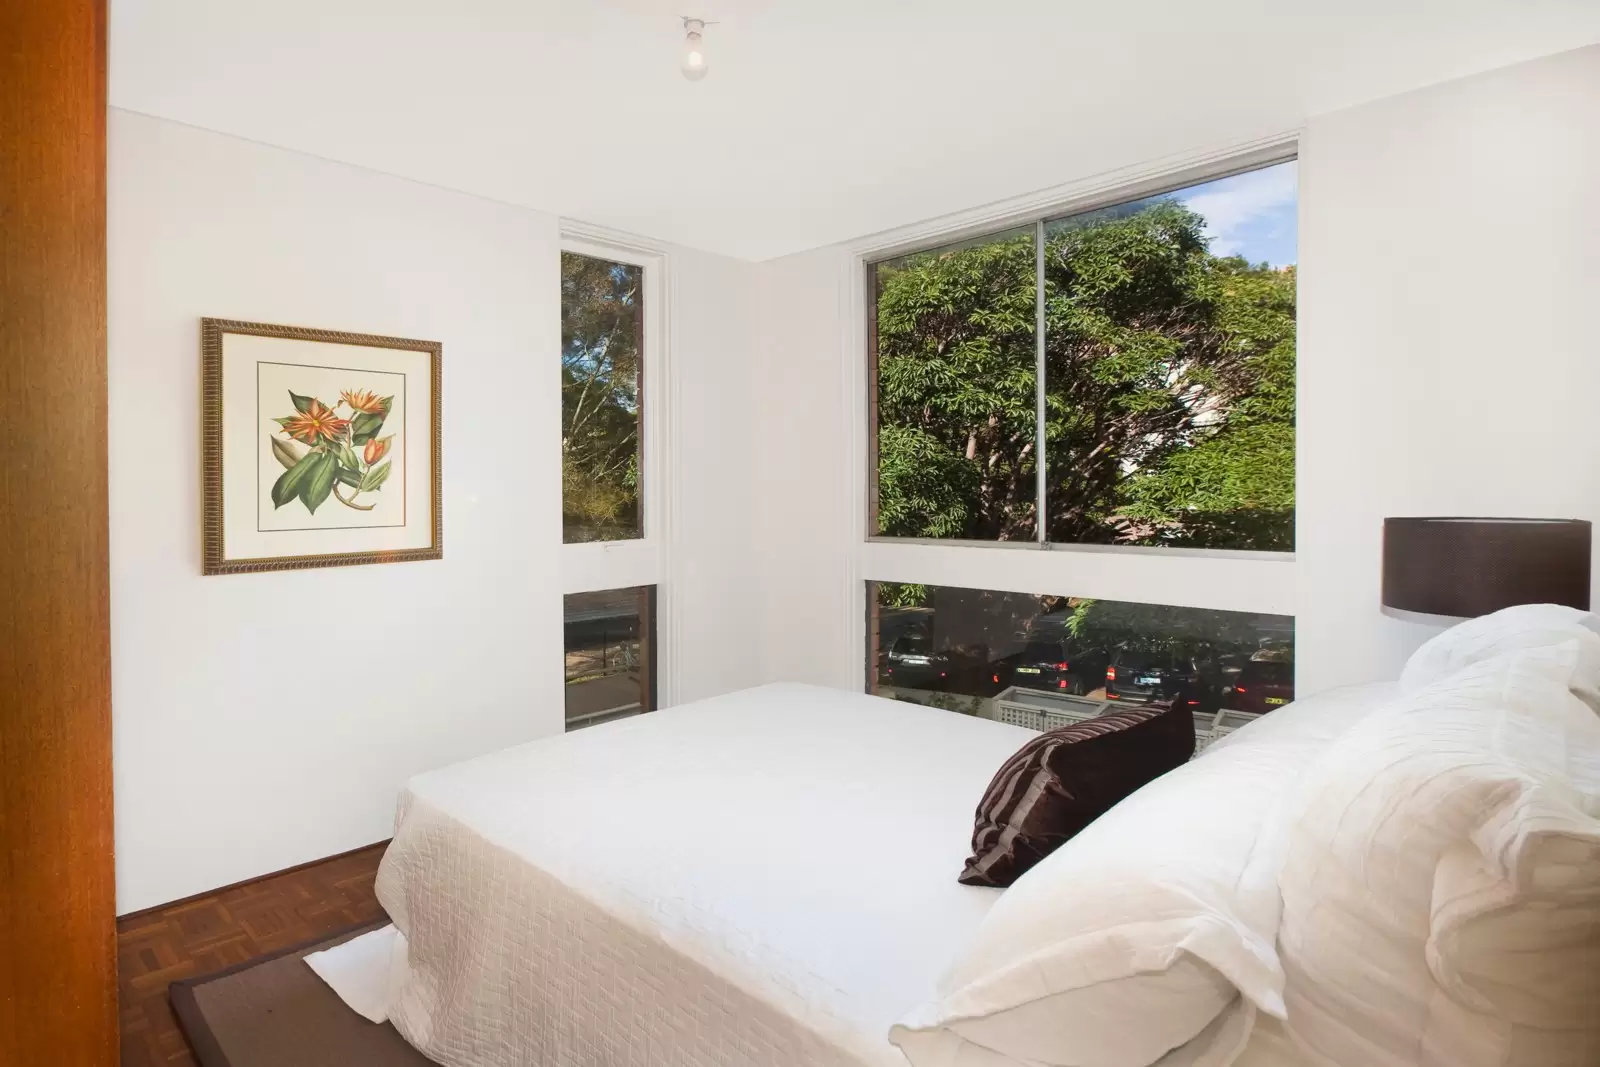 11/100 Birriga Road, Bellevue Hill Sold by Sydney Sotheby's International Realty - image 5